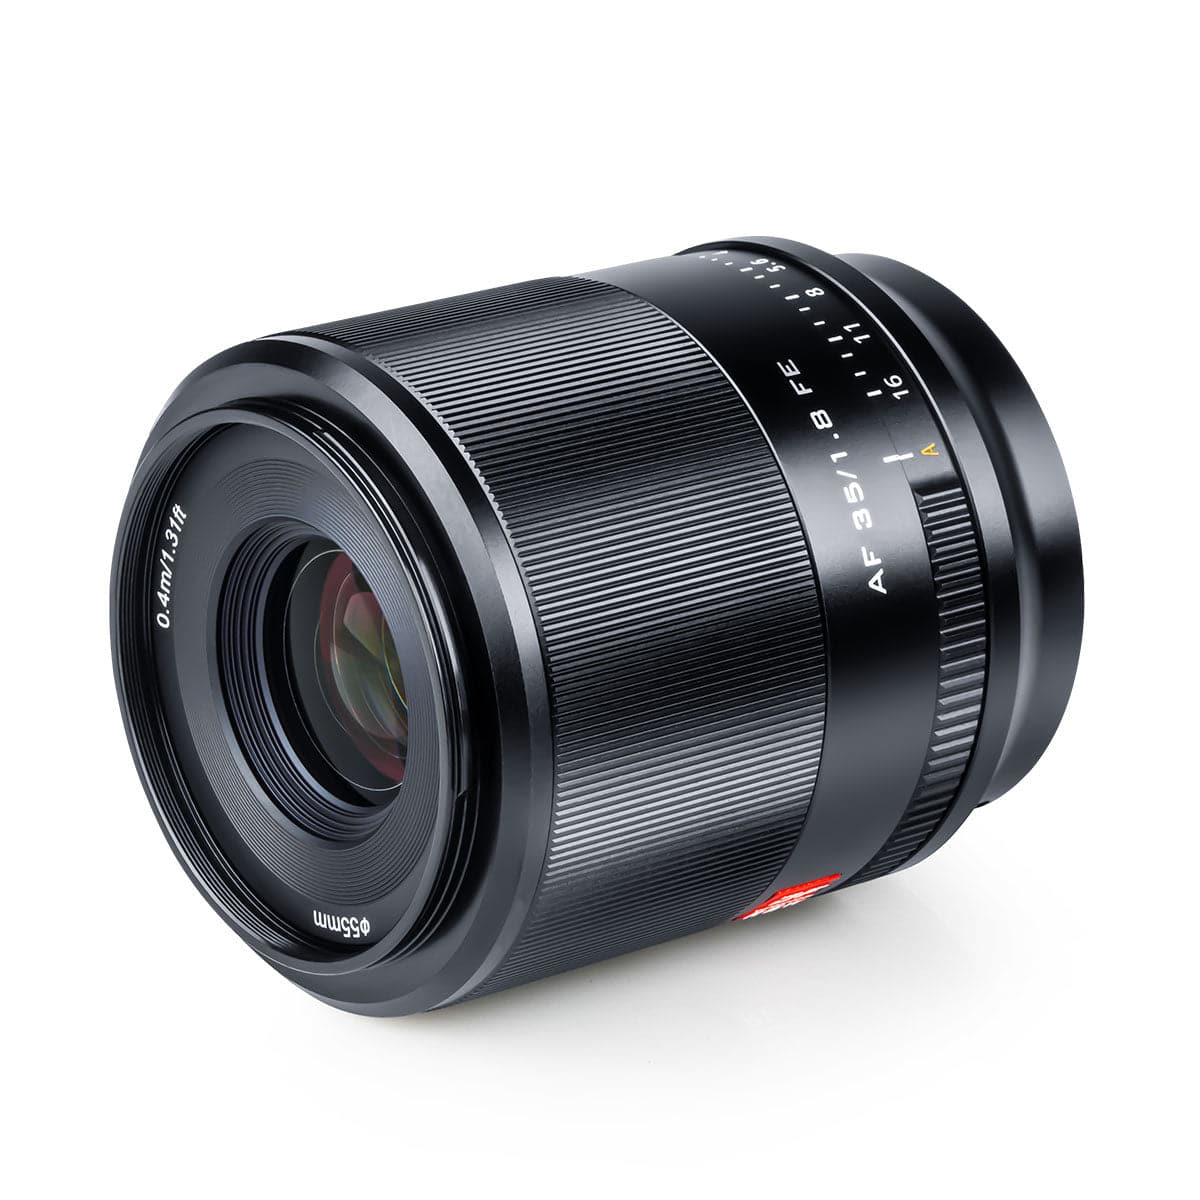 Viltrox 35mm F1.8 FE Mount Auto Focus Full-frame Large Aperture Prime Lens for Sony E-mount Mirrorless Cameras